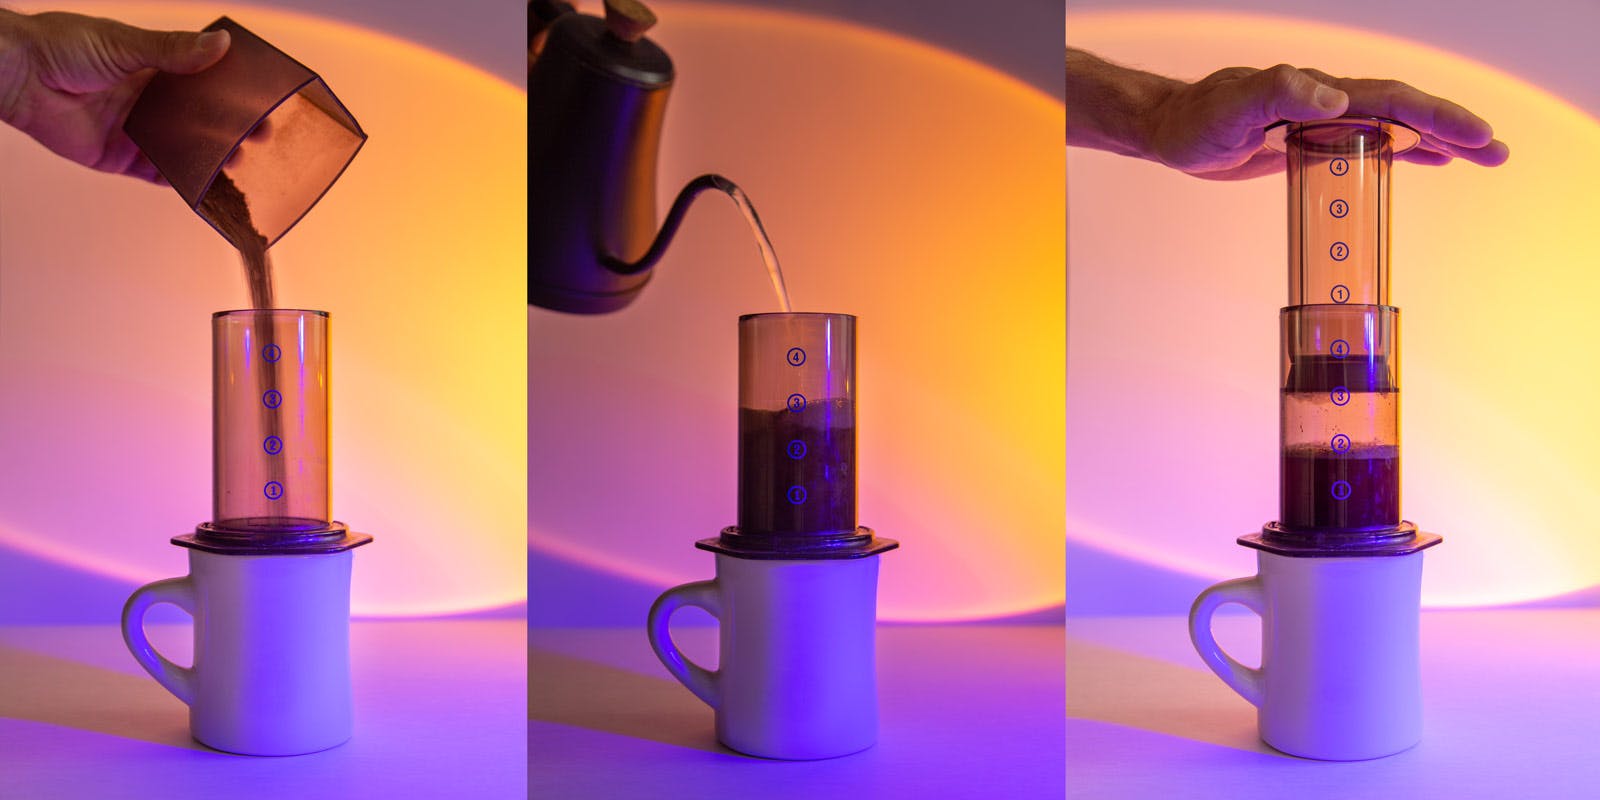 three images of an AeroPress coffee maker 